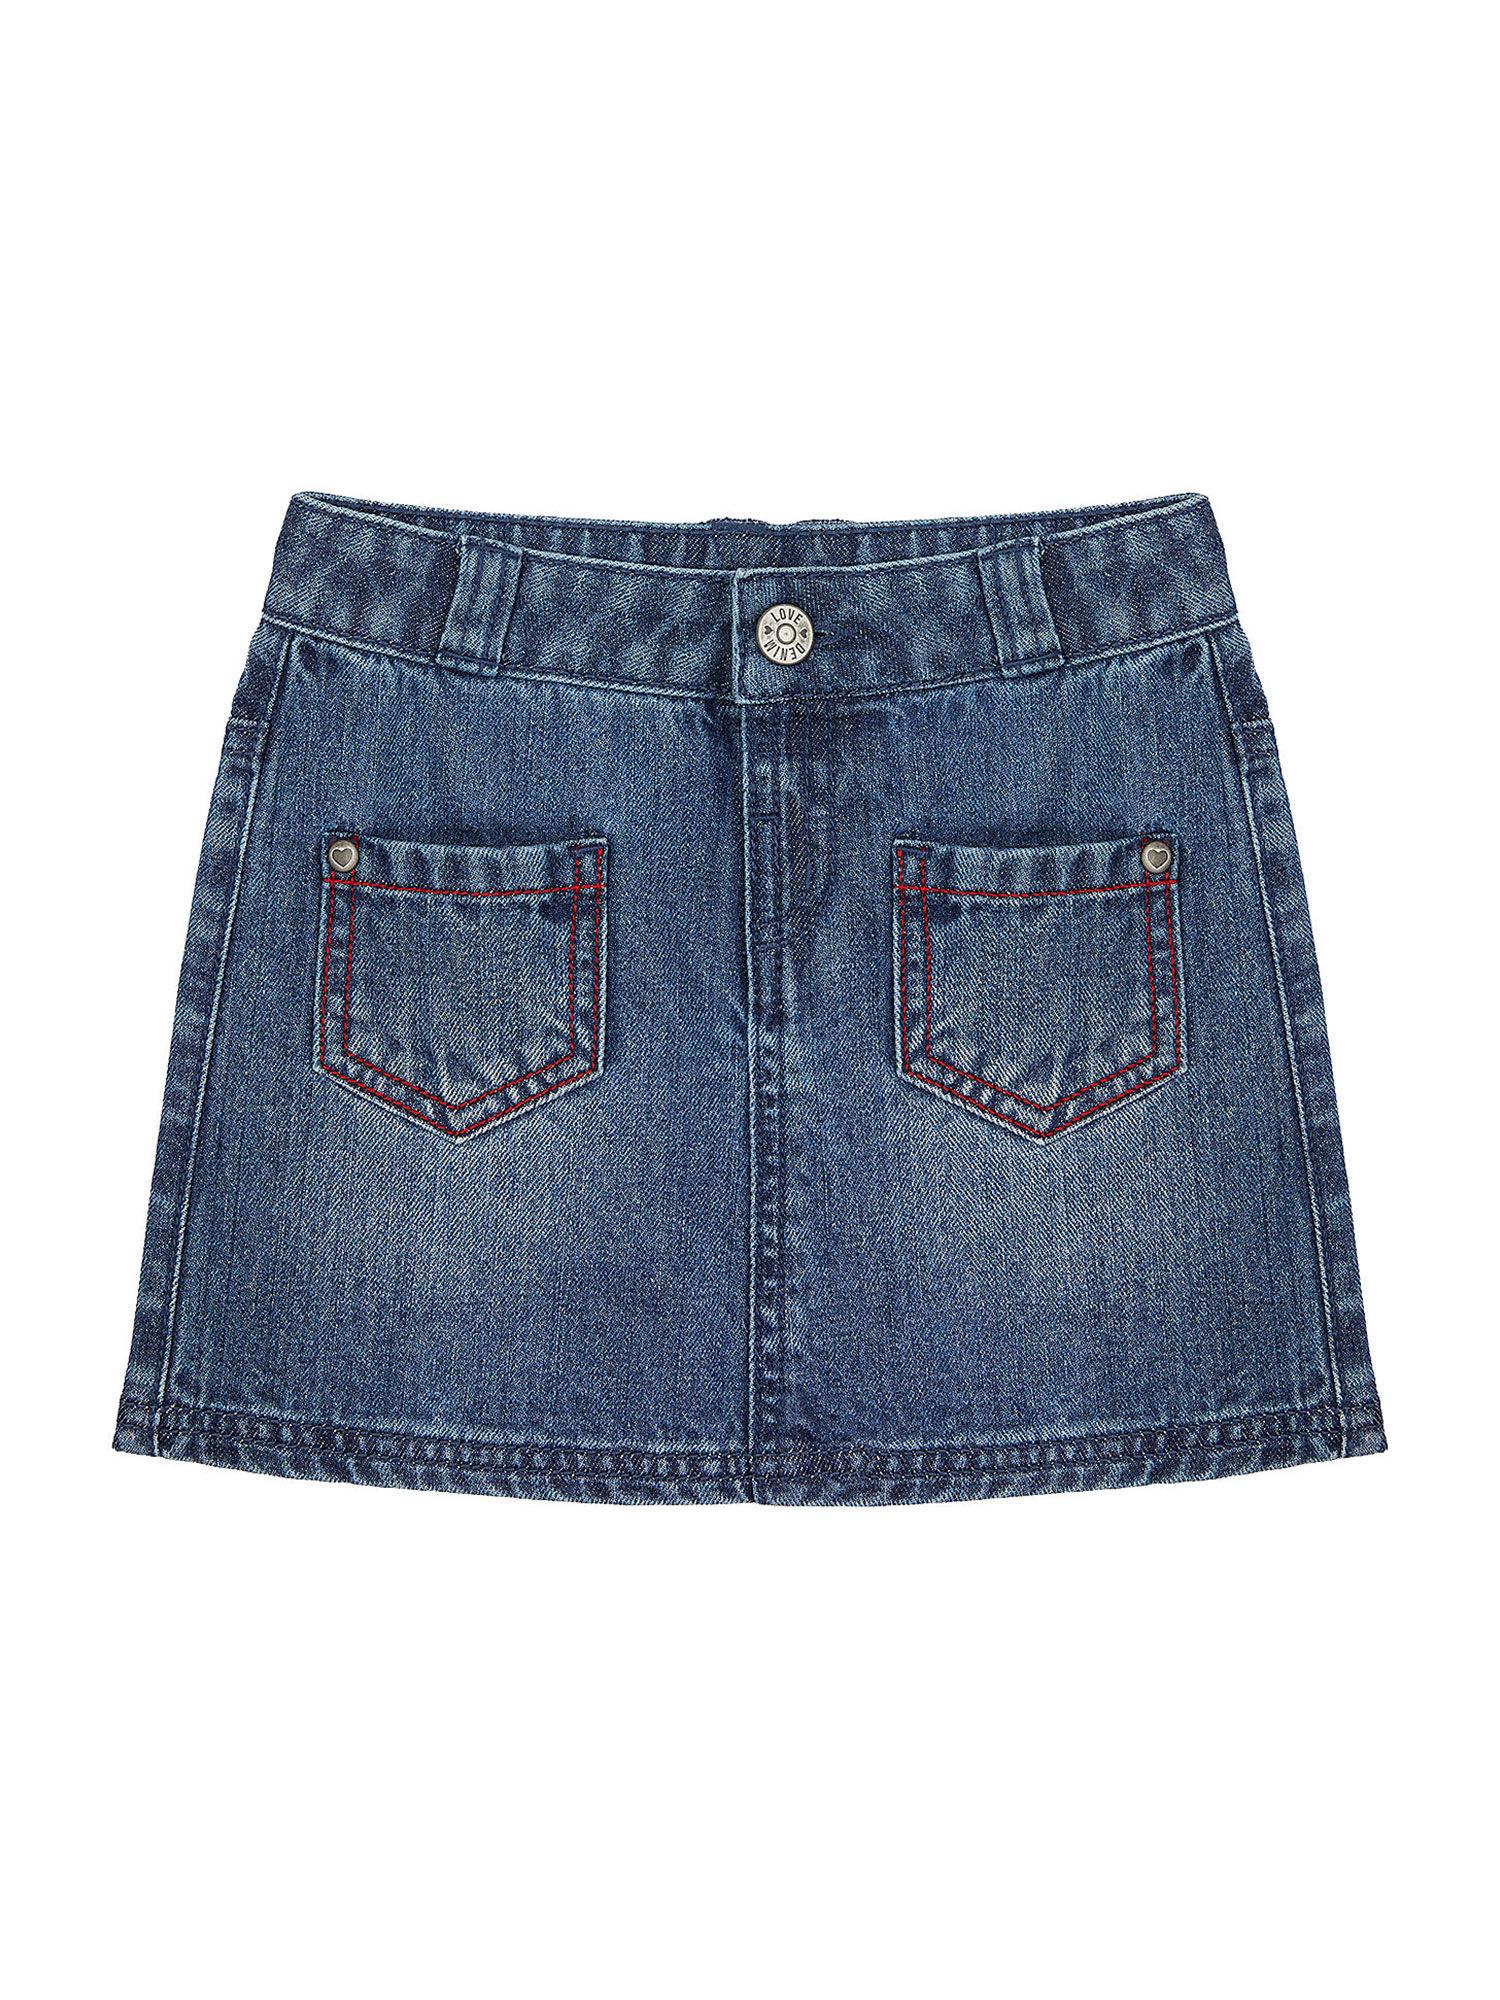 girls denim skirt with pocket details